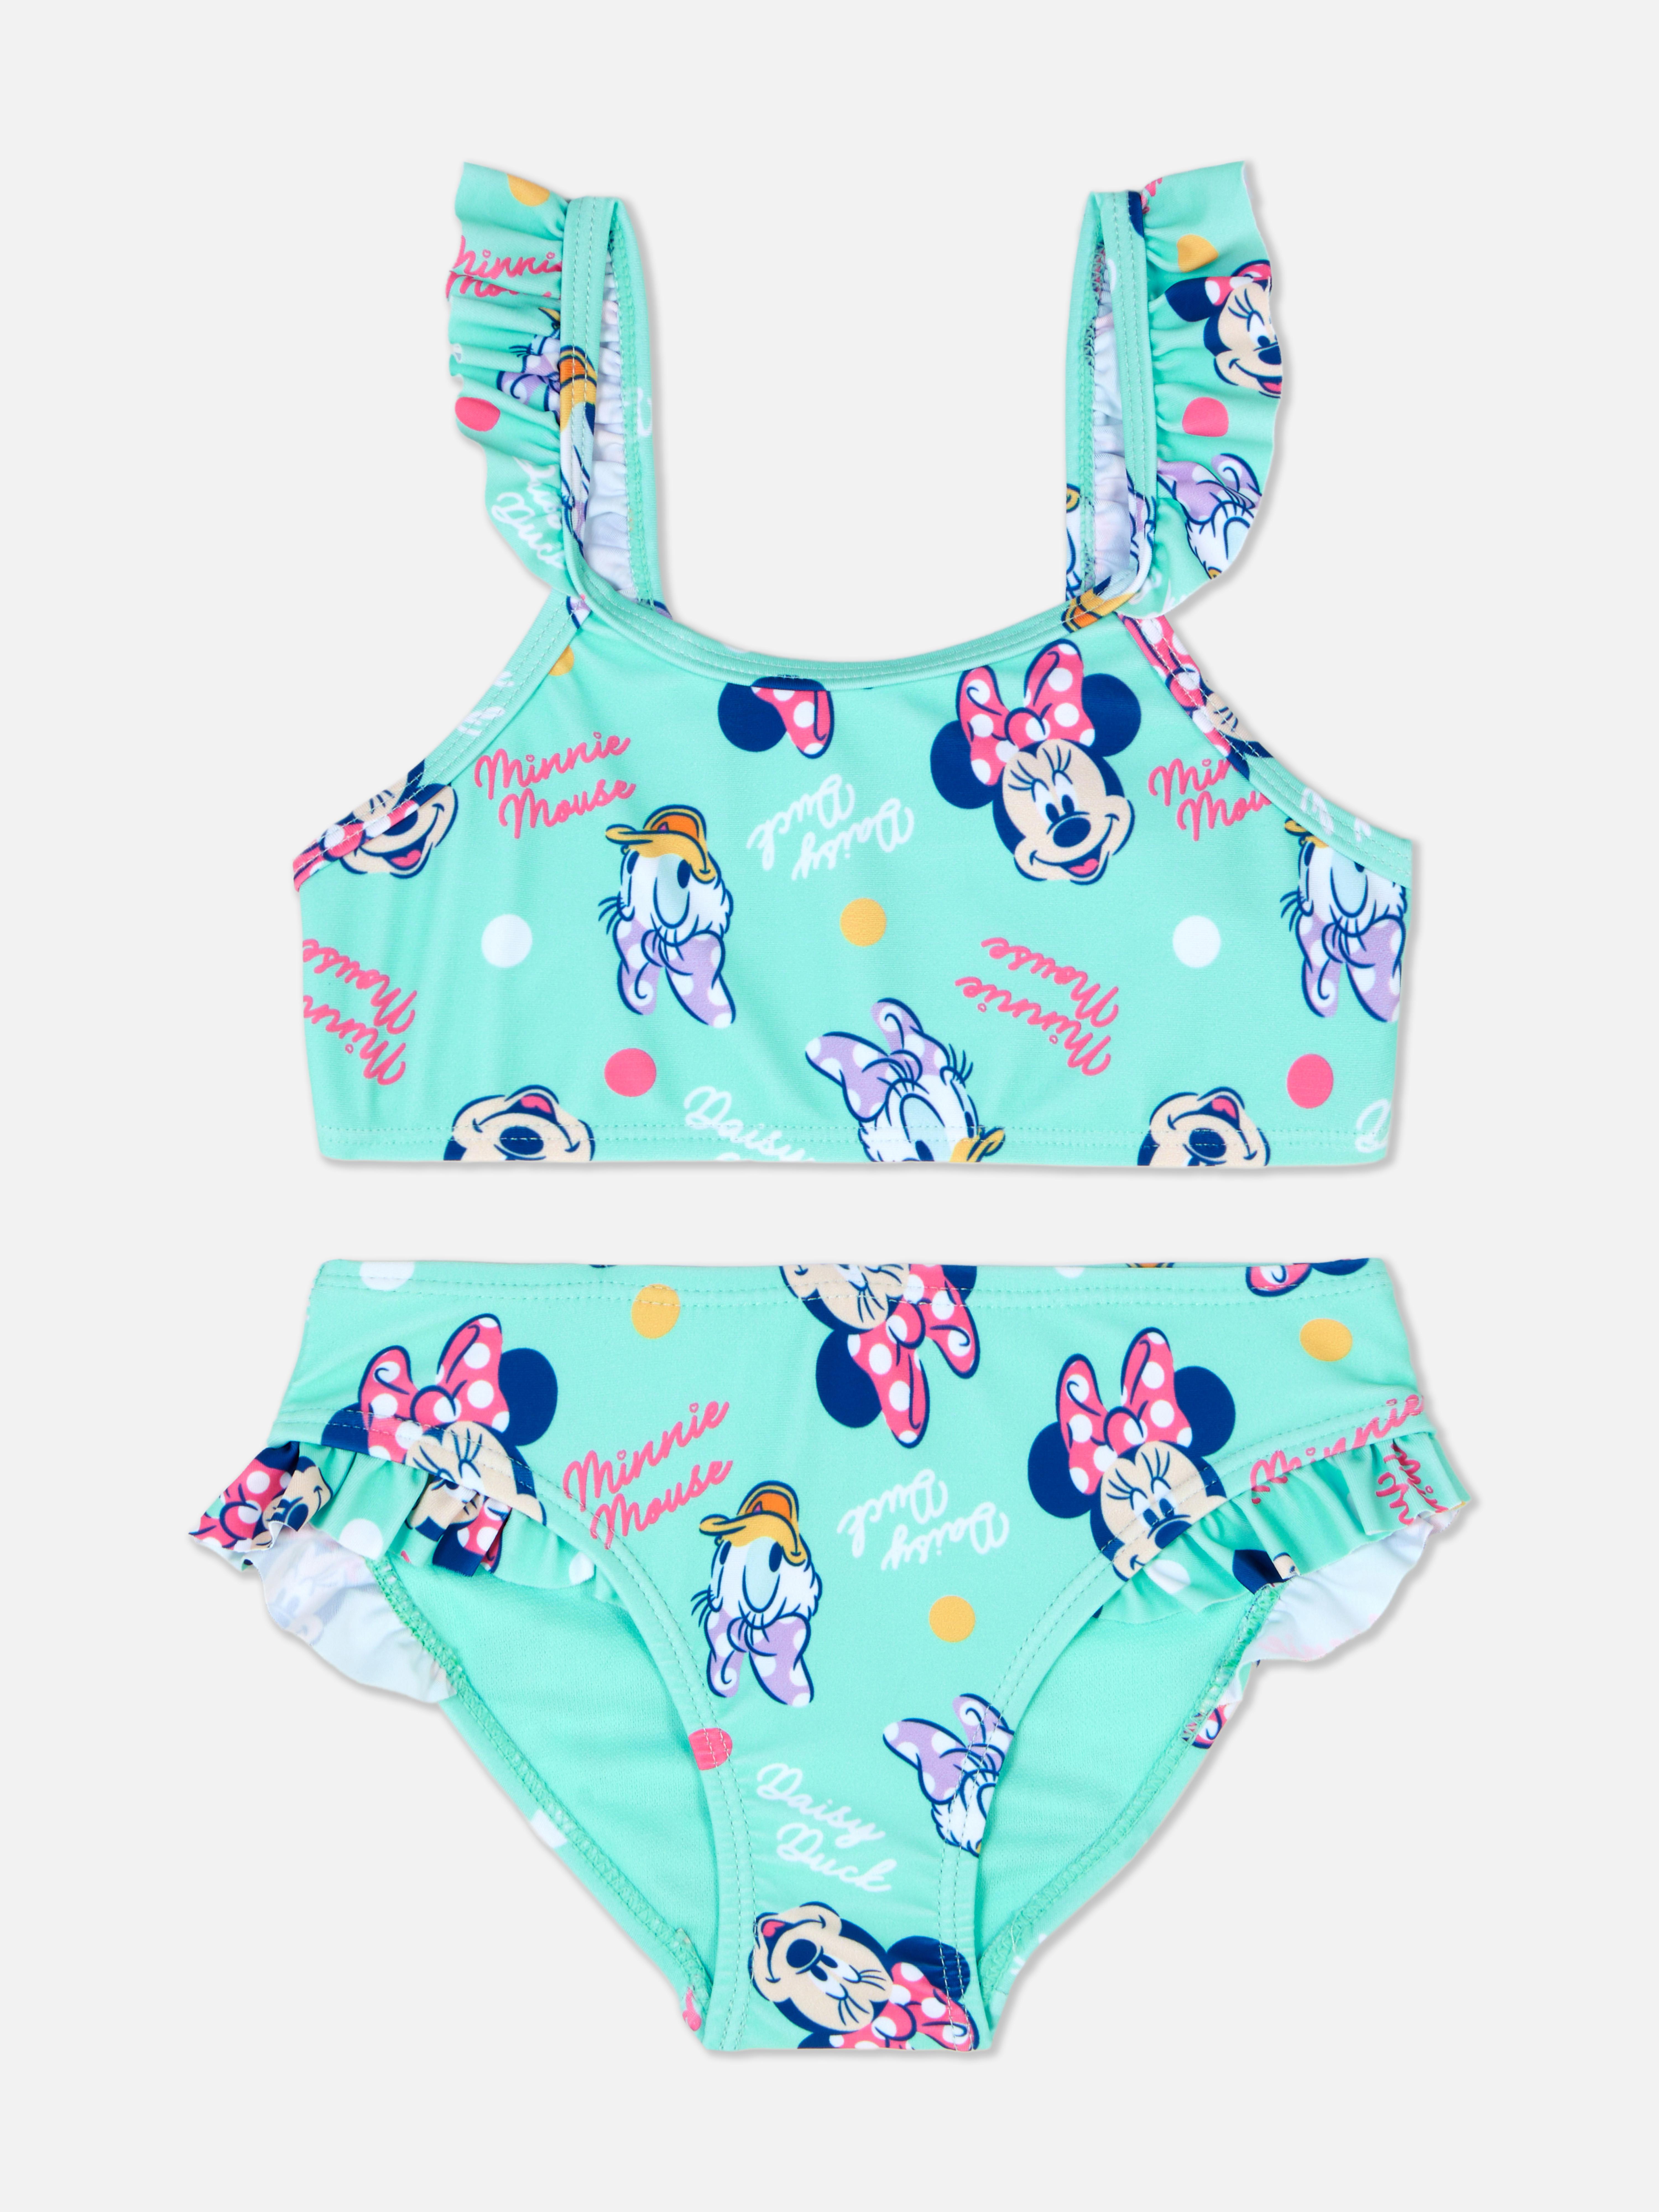 Bikini de Minnie Mouse y Daisy de Disney